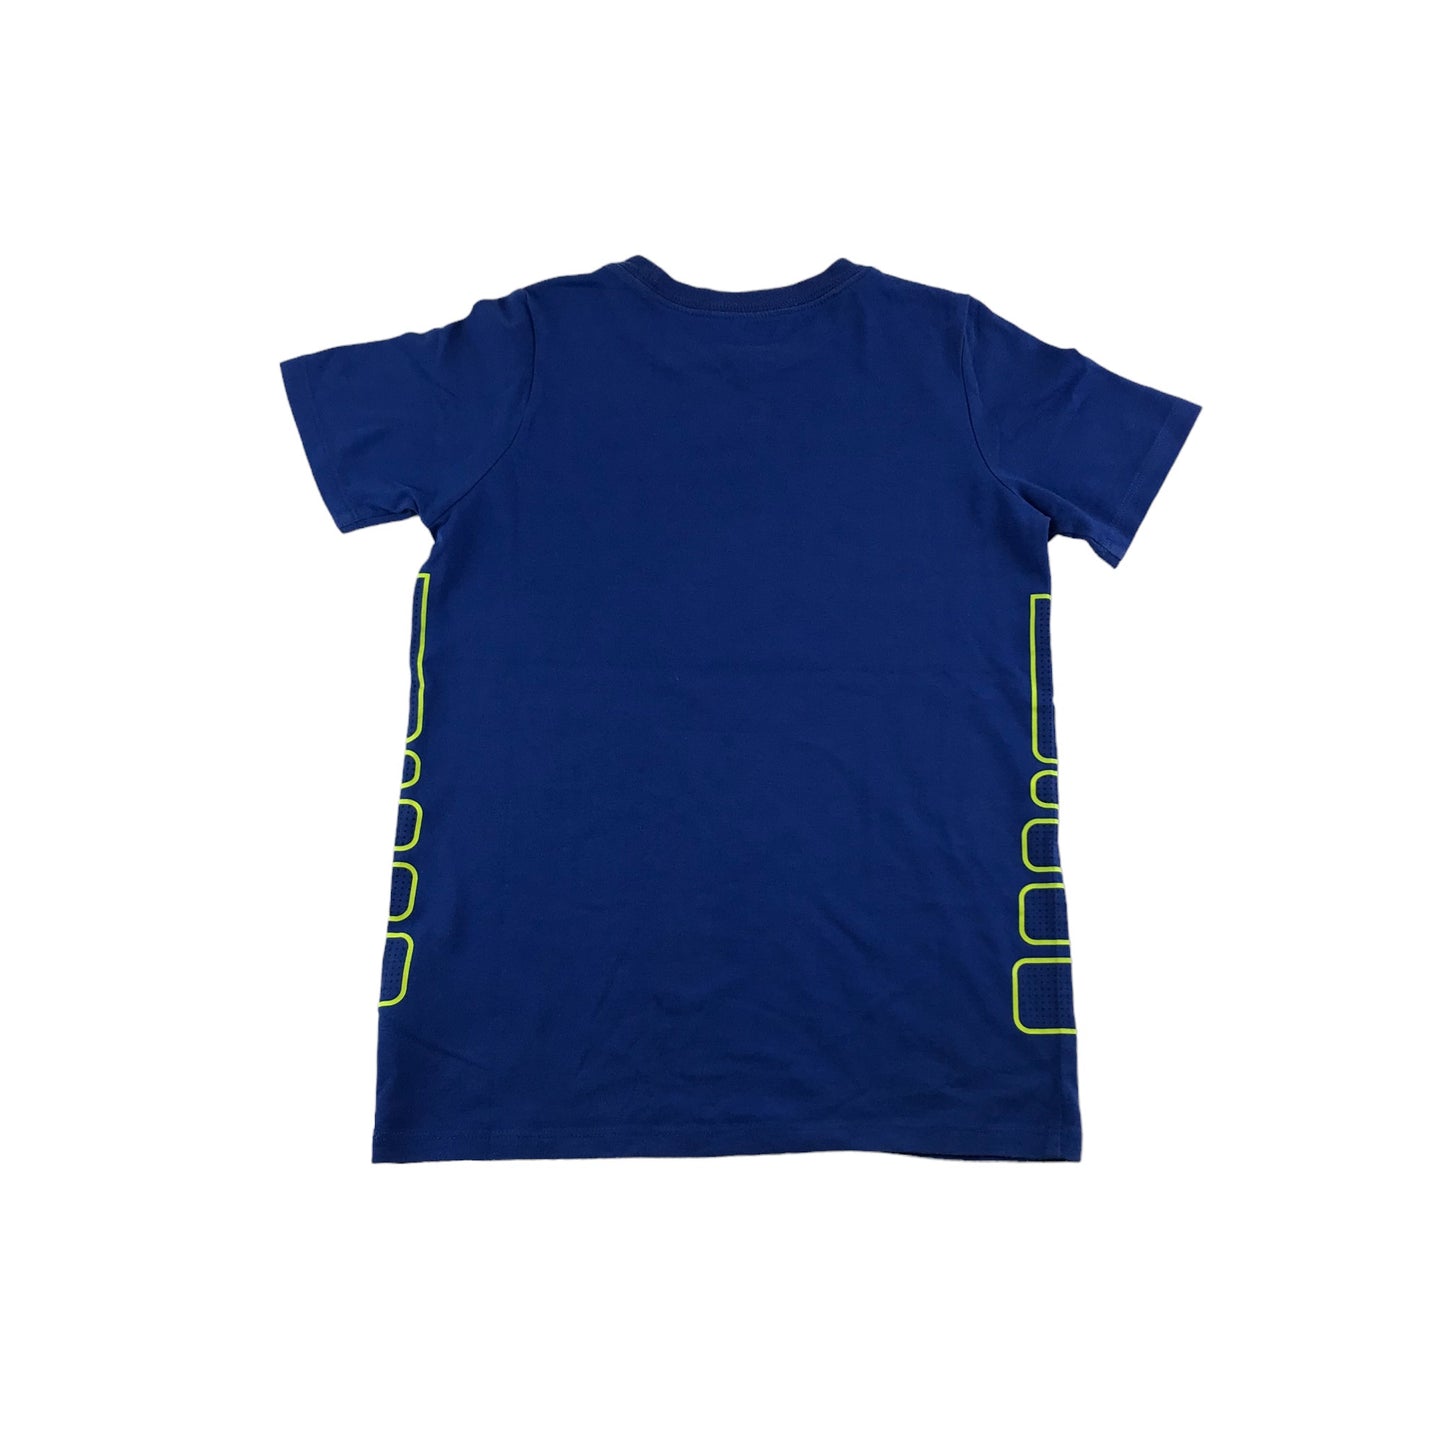 Nike Elite T-shirt Age 7 Royal Blue Short Sleeve Dri-Fit